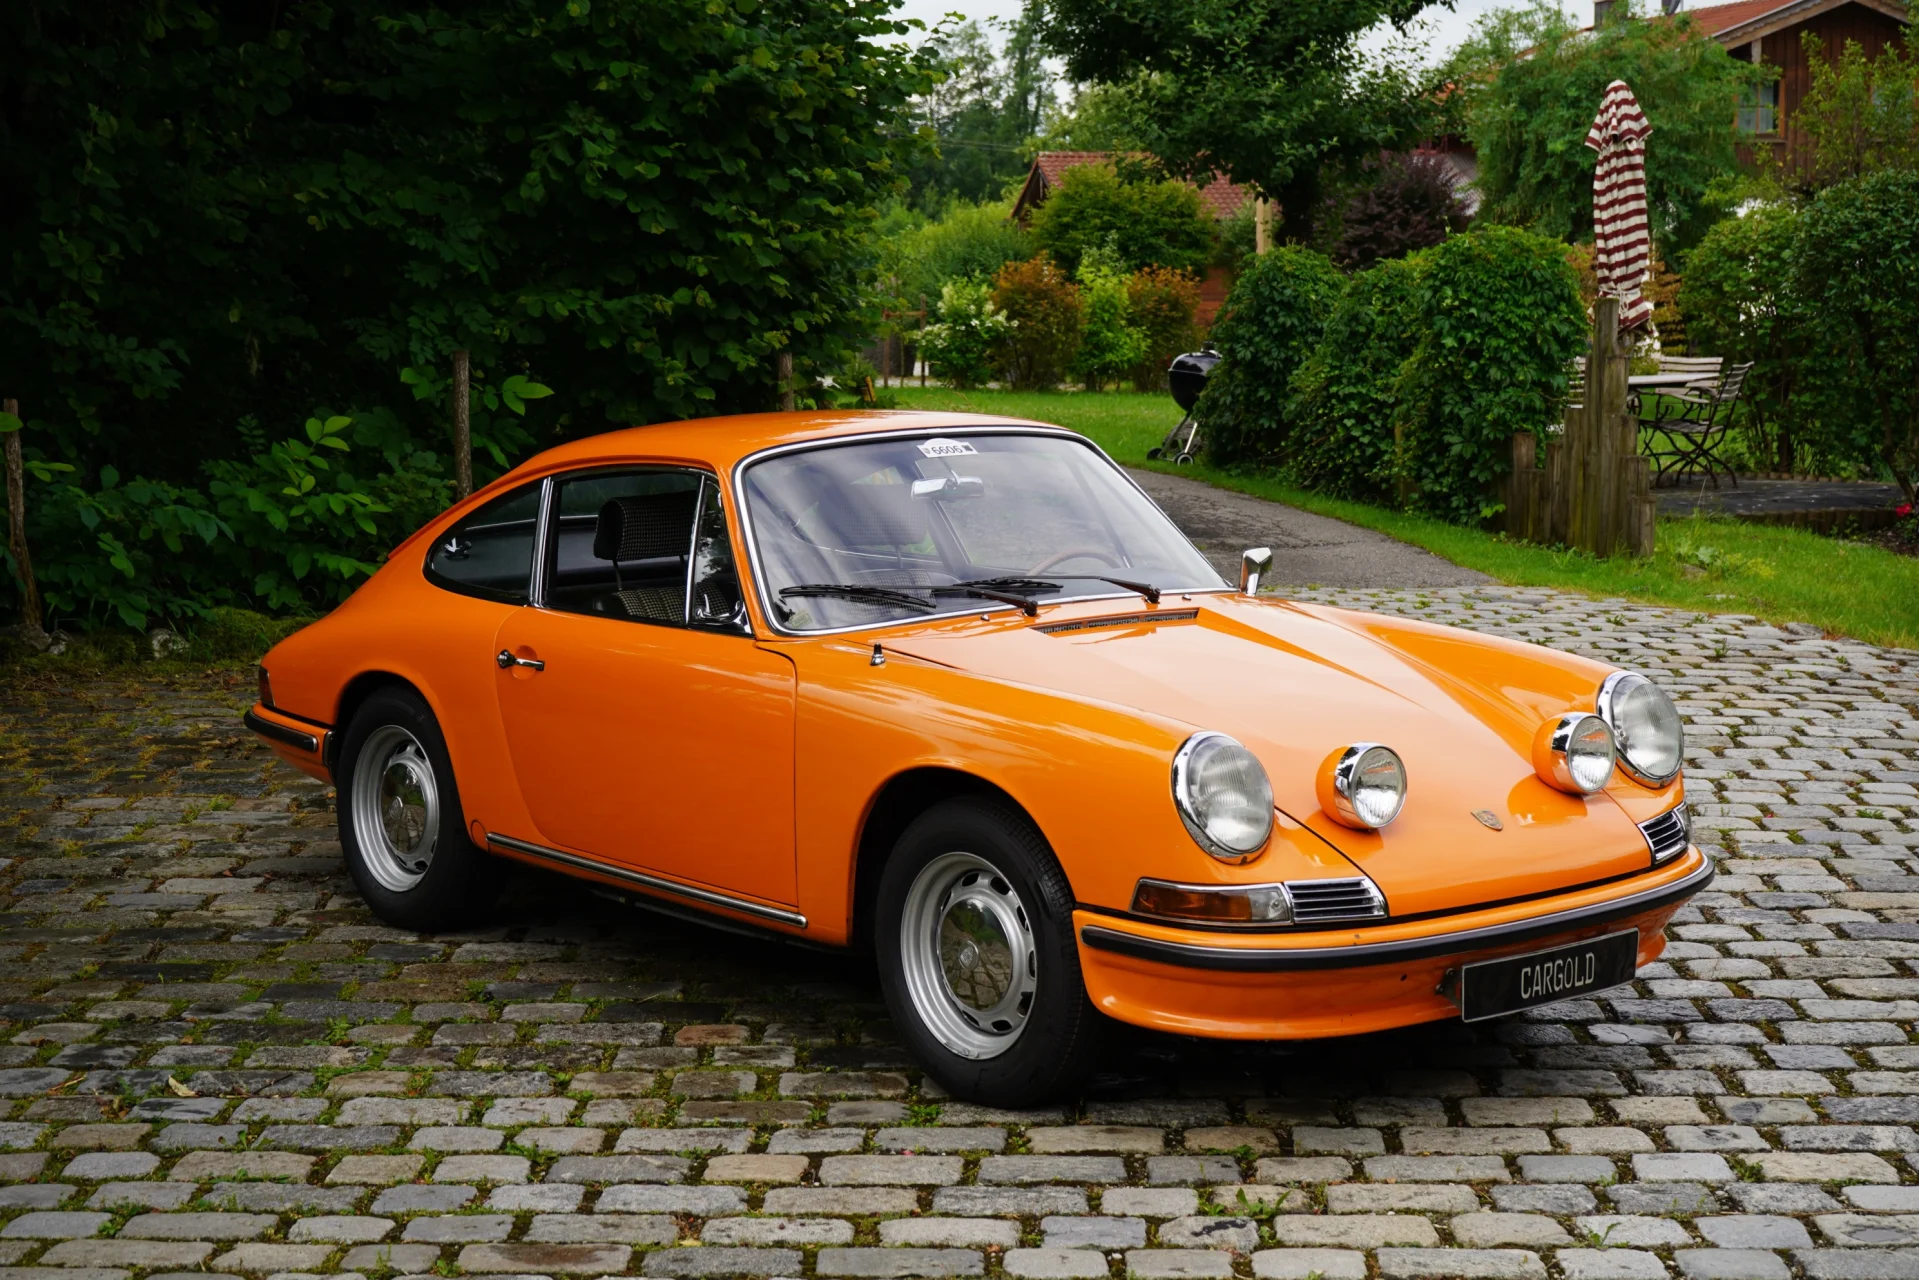 1965 Porsche 911 For Sale | duPont REGISTRY